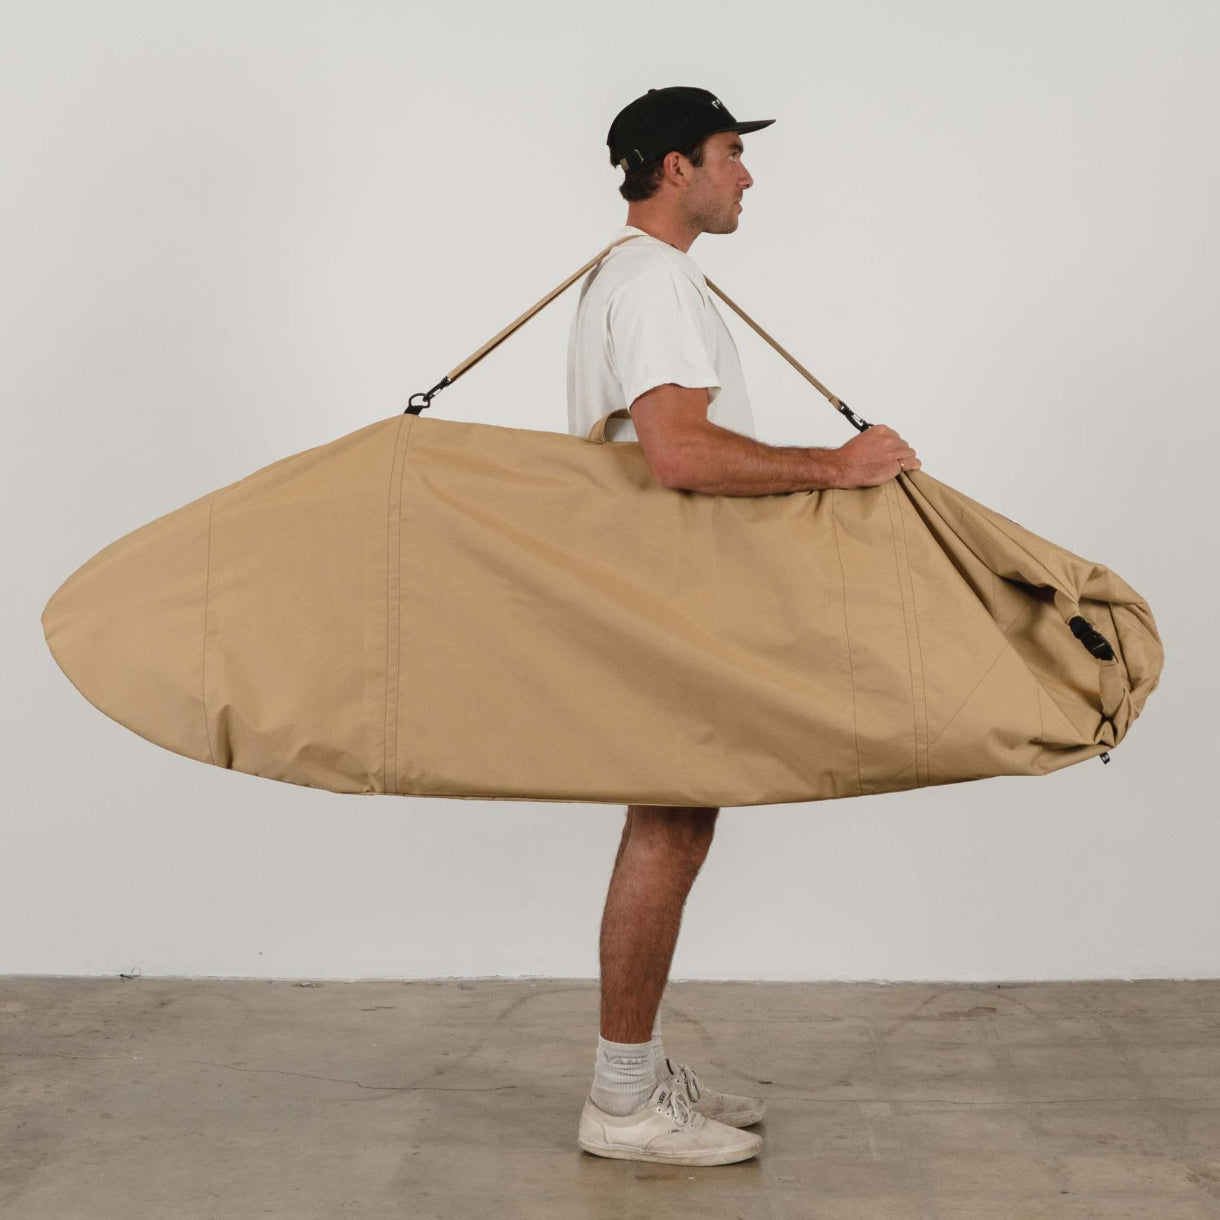 Transit Gun 10 ft - Surfboard Travel Bag | Quiksilver